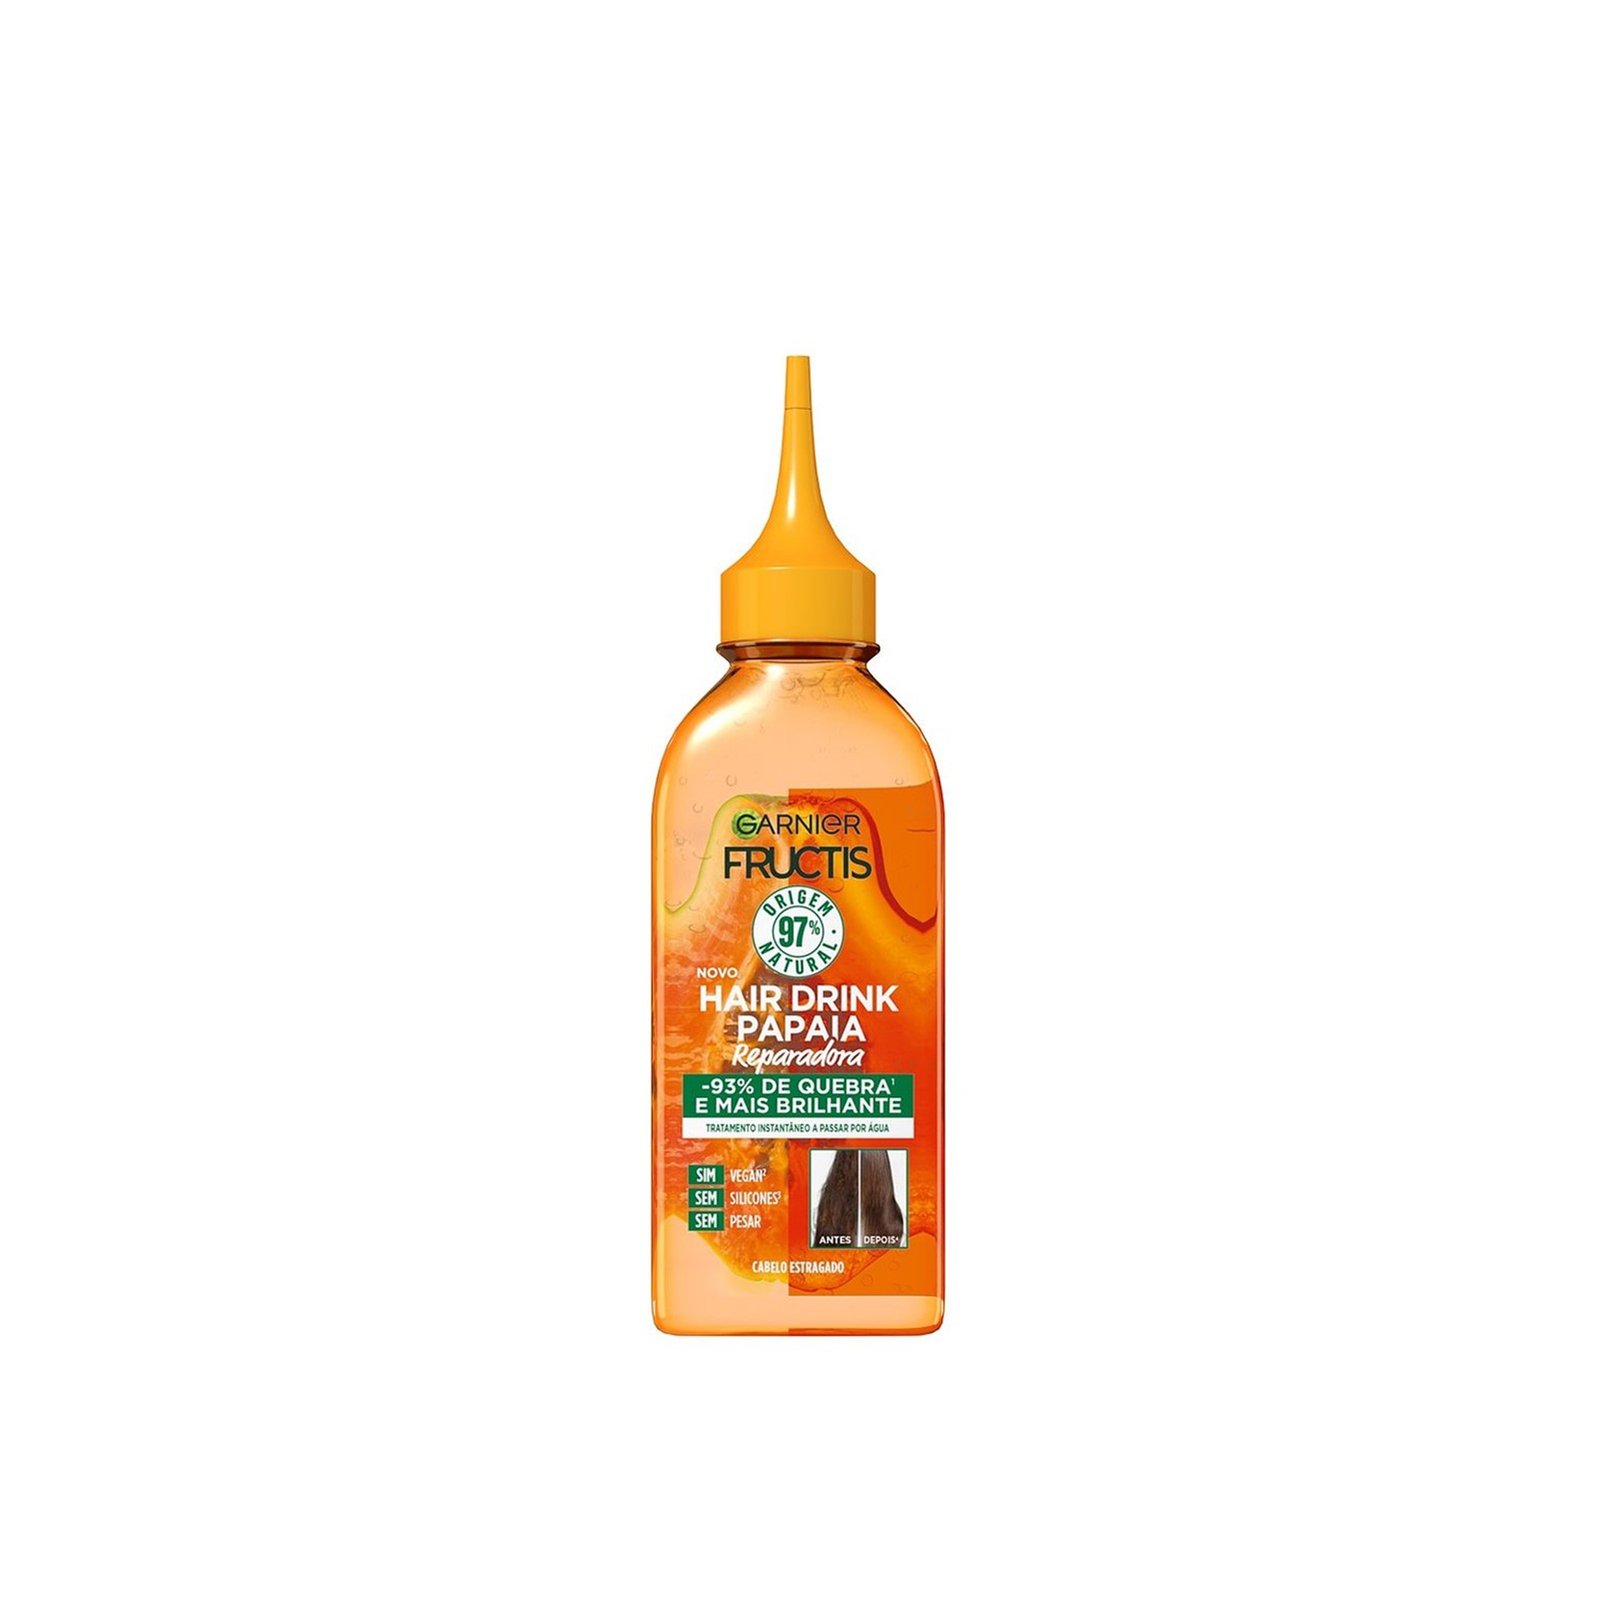 Garnier Fructis Hair Drink Papaya Repairing Instant Lamellar Treatment 200ml (6.76 fl oz)